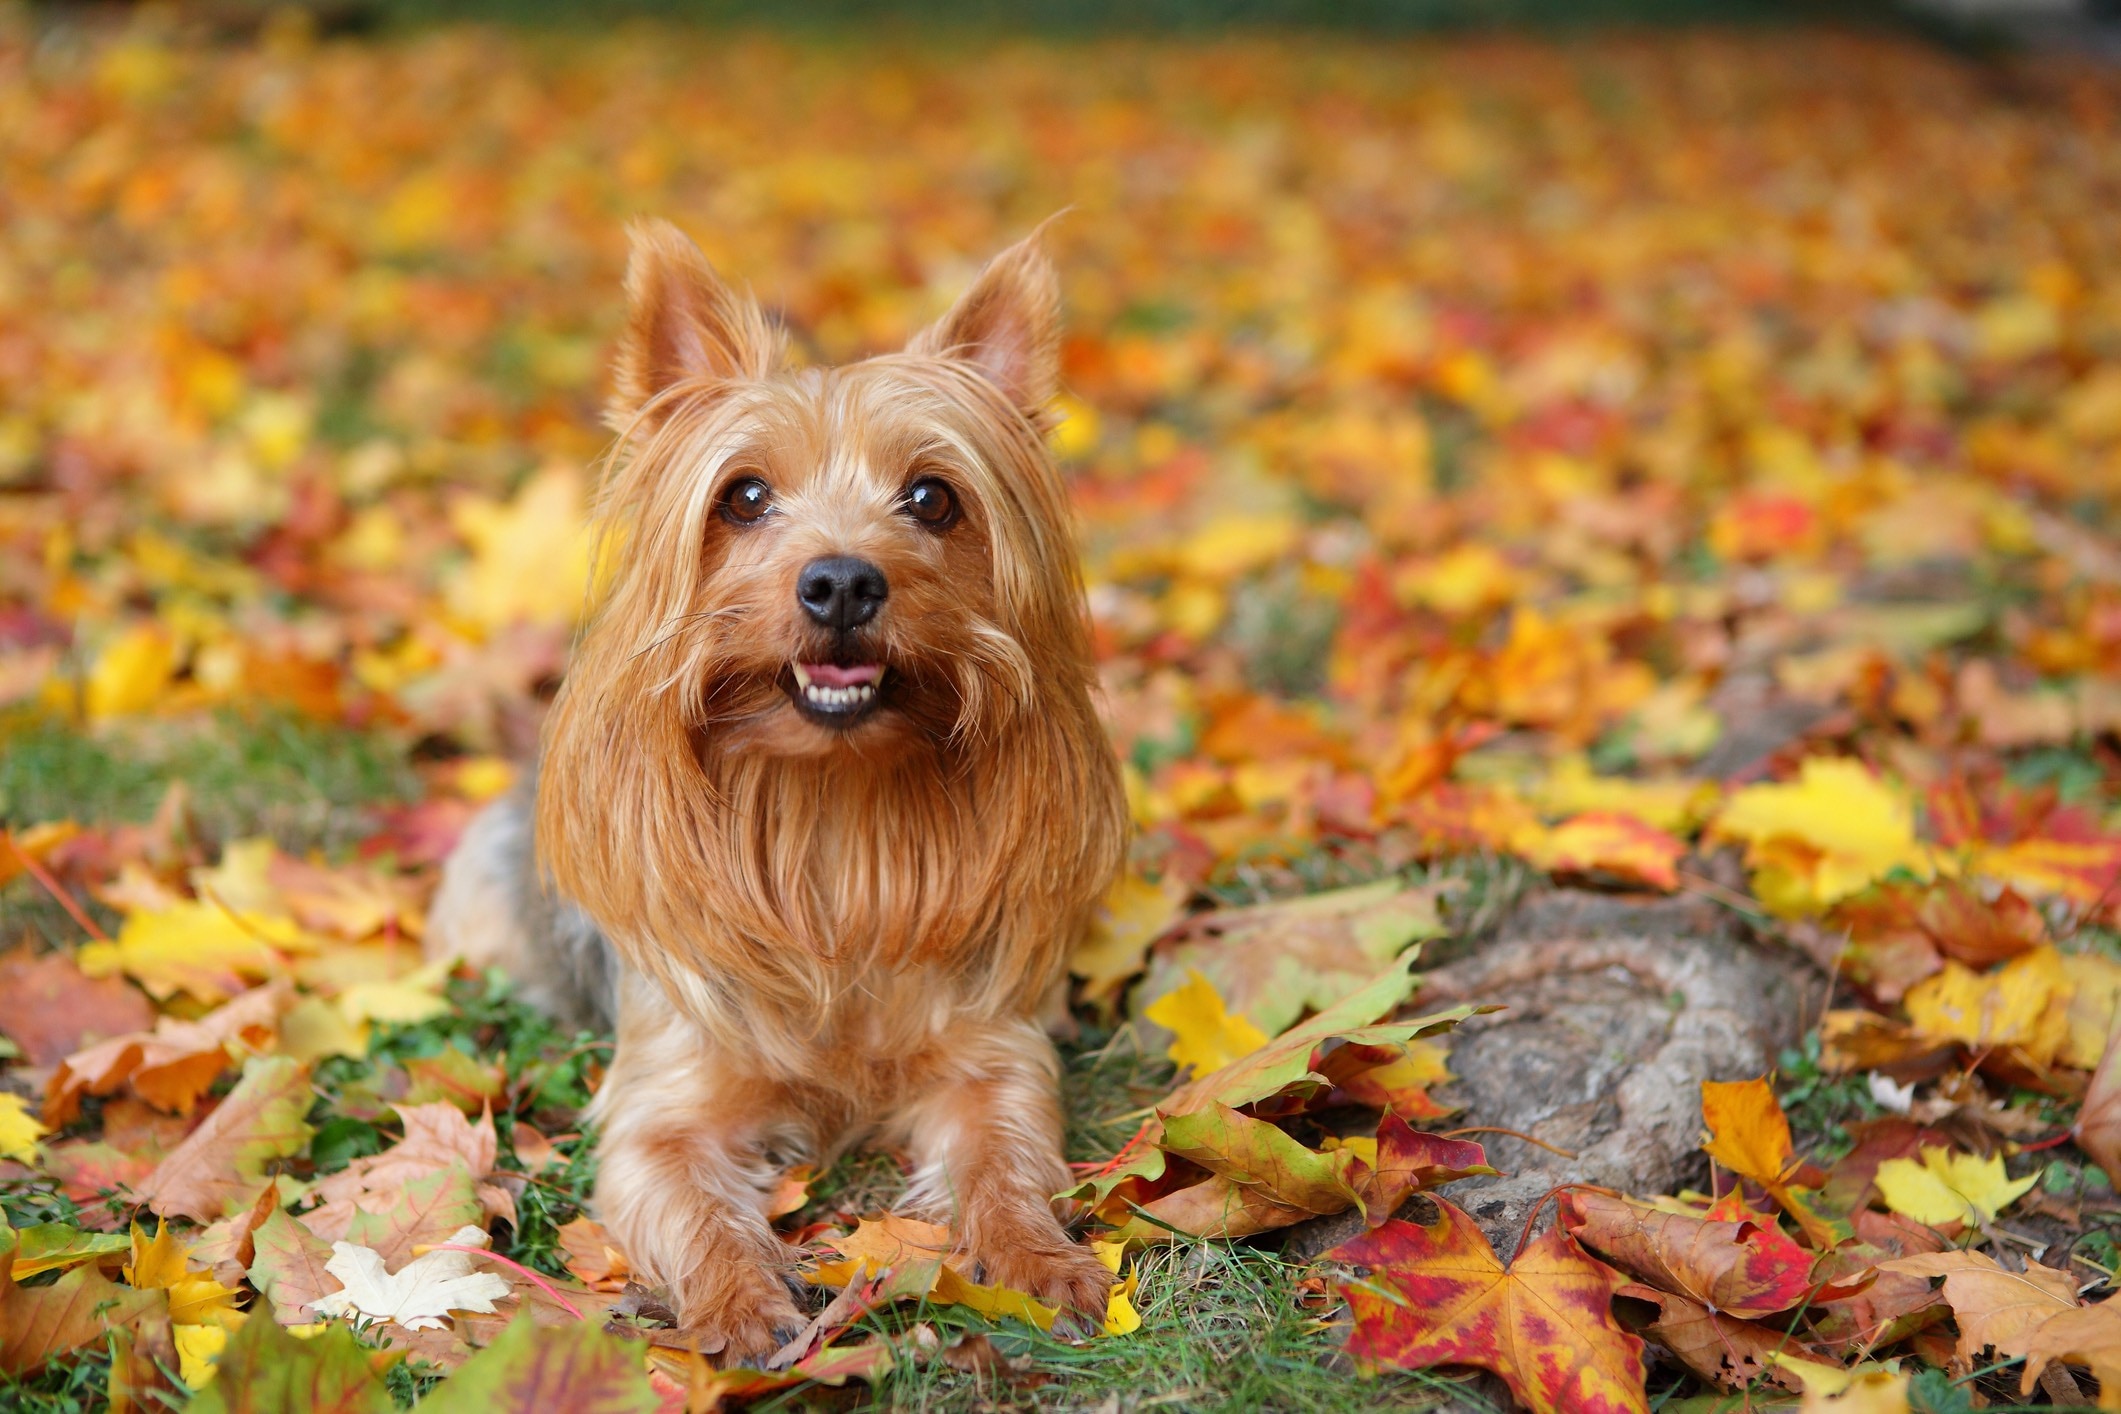 silky terrier lying among autumn leaves